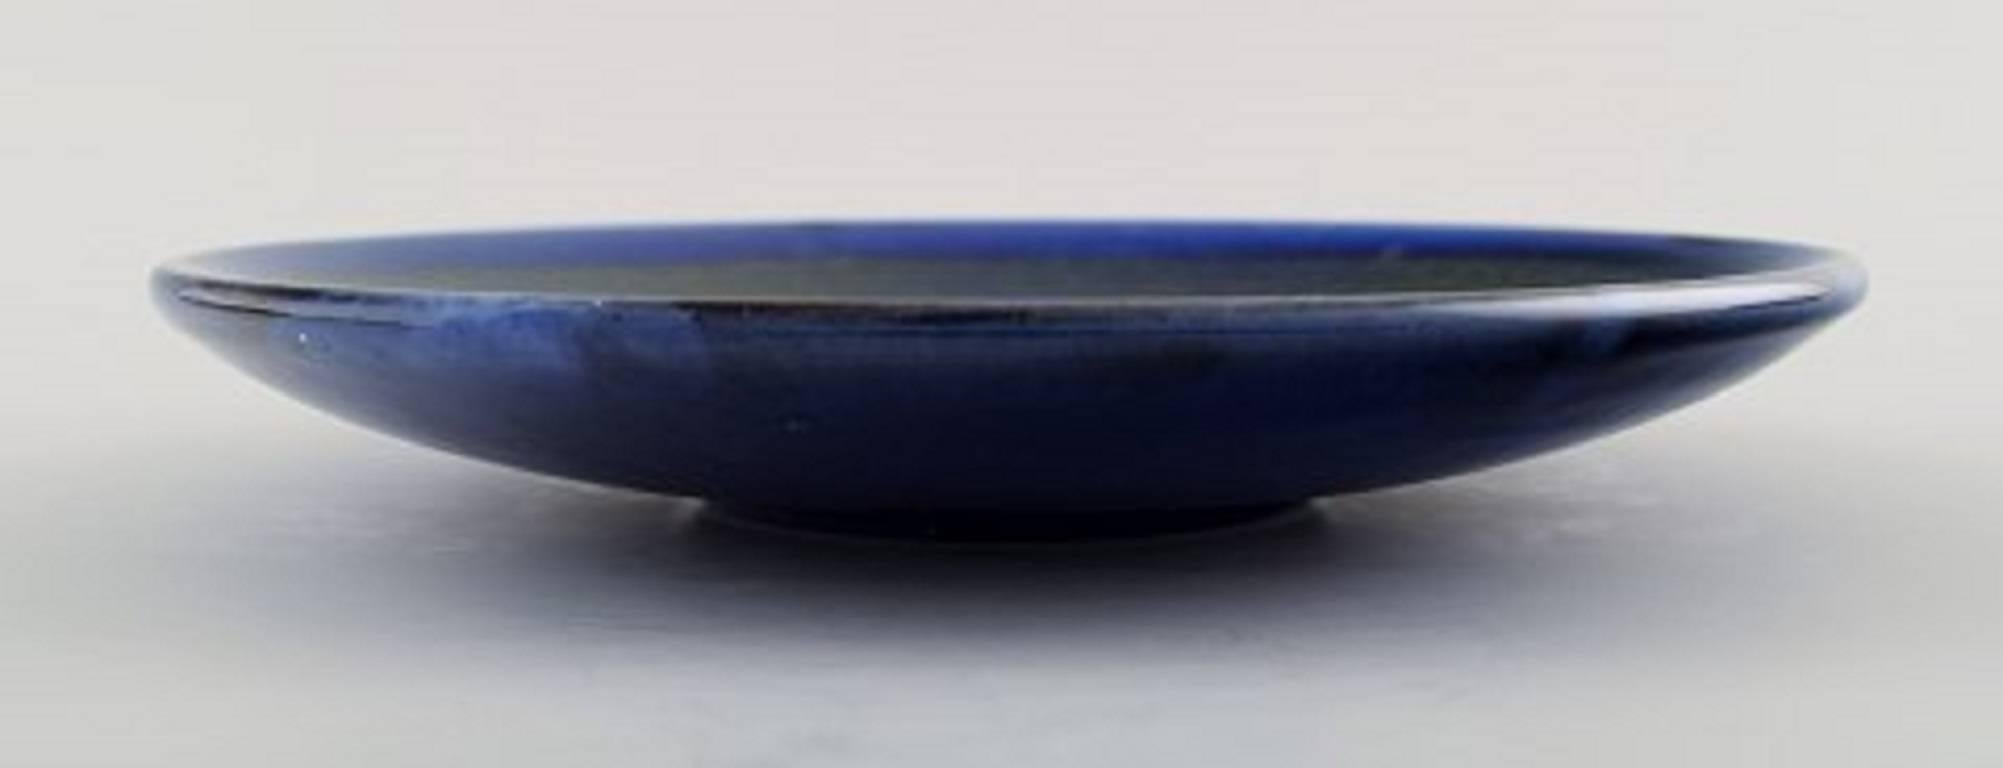 Upsala-Ekeby Ceramic Dish, Glaze in Blue and Black Tones, Sweden, 1950s In Excellent Condition For Sale In Copenhagen, DK